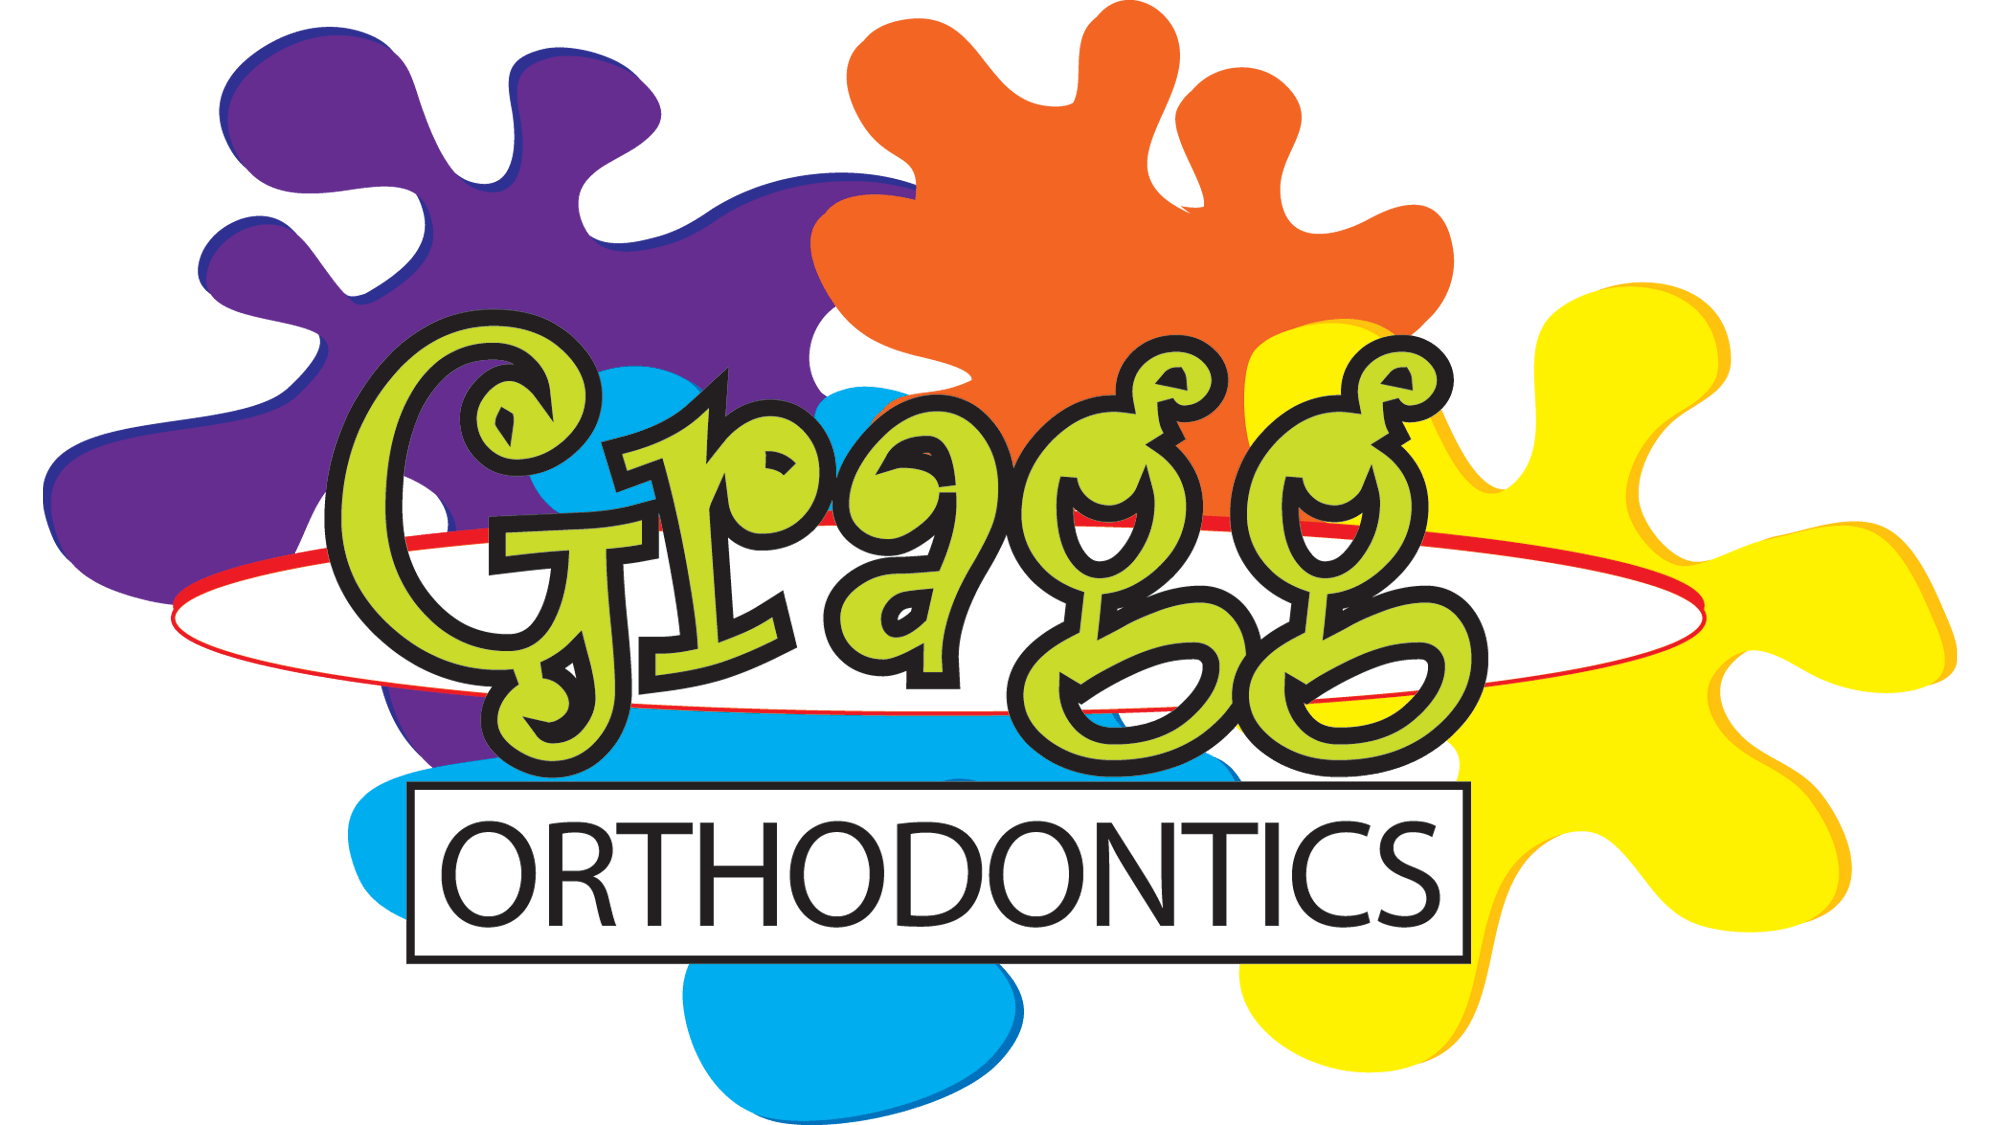 Gragg Orthodontics logo